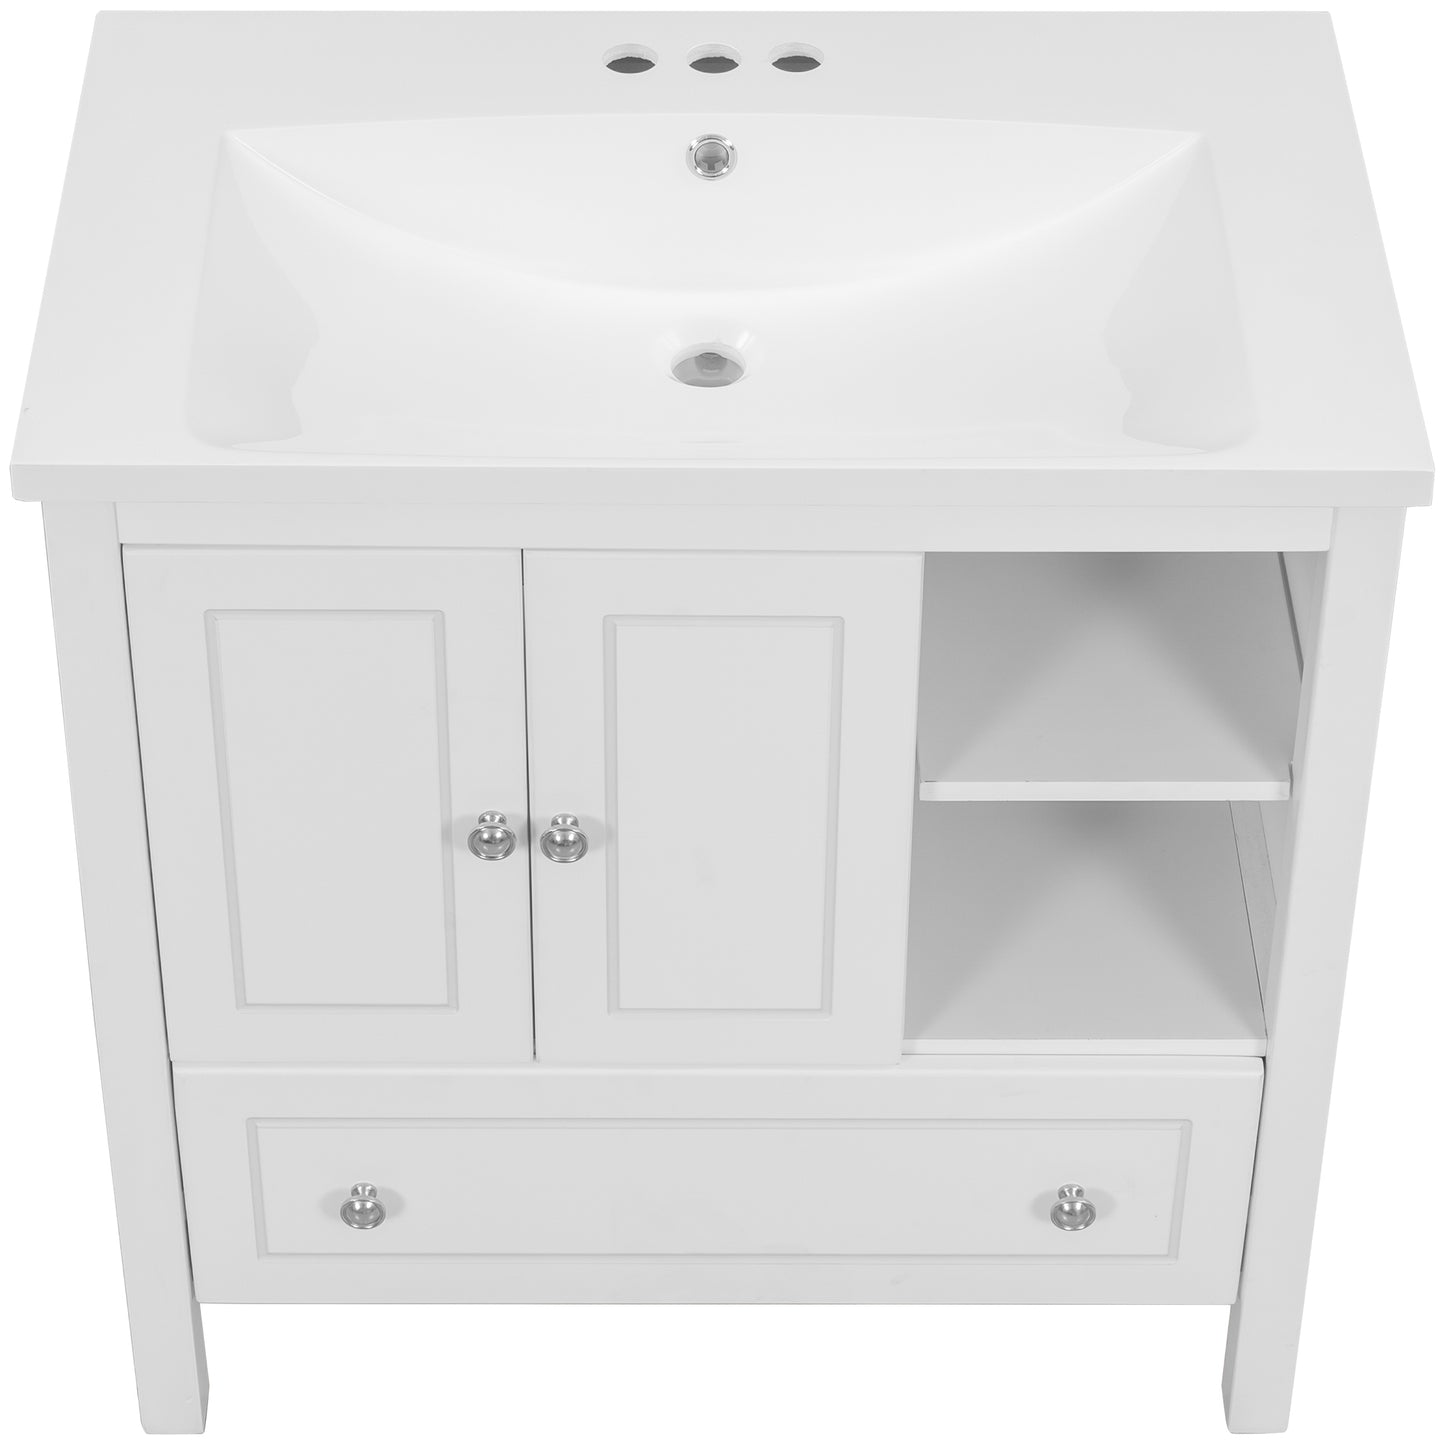 [VIDEO] 30" Bathroom Vanity with Sink, Bathroom Storage Cabinet with Doors and Drawers, Solid Wood Frame, Ceramic Sink, White